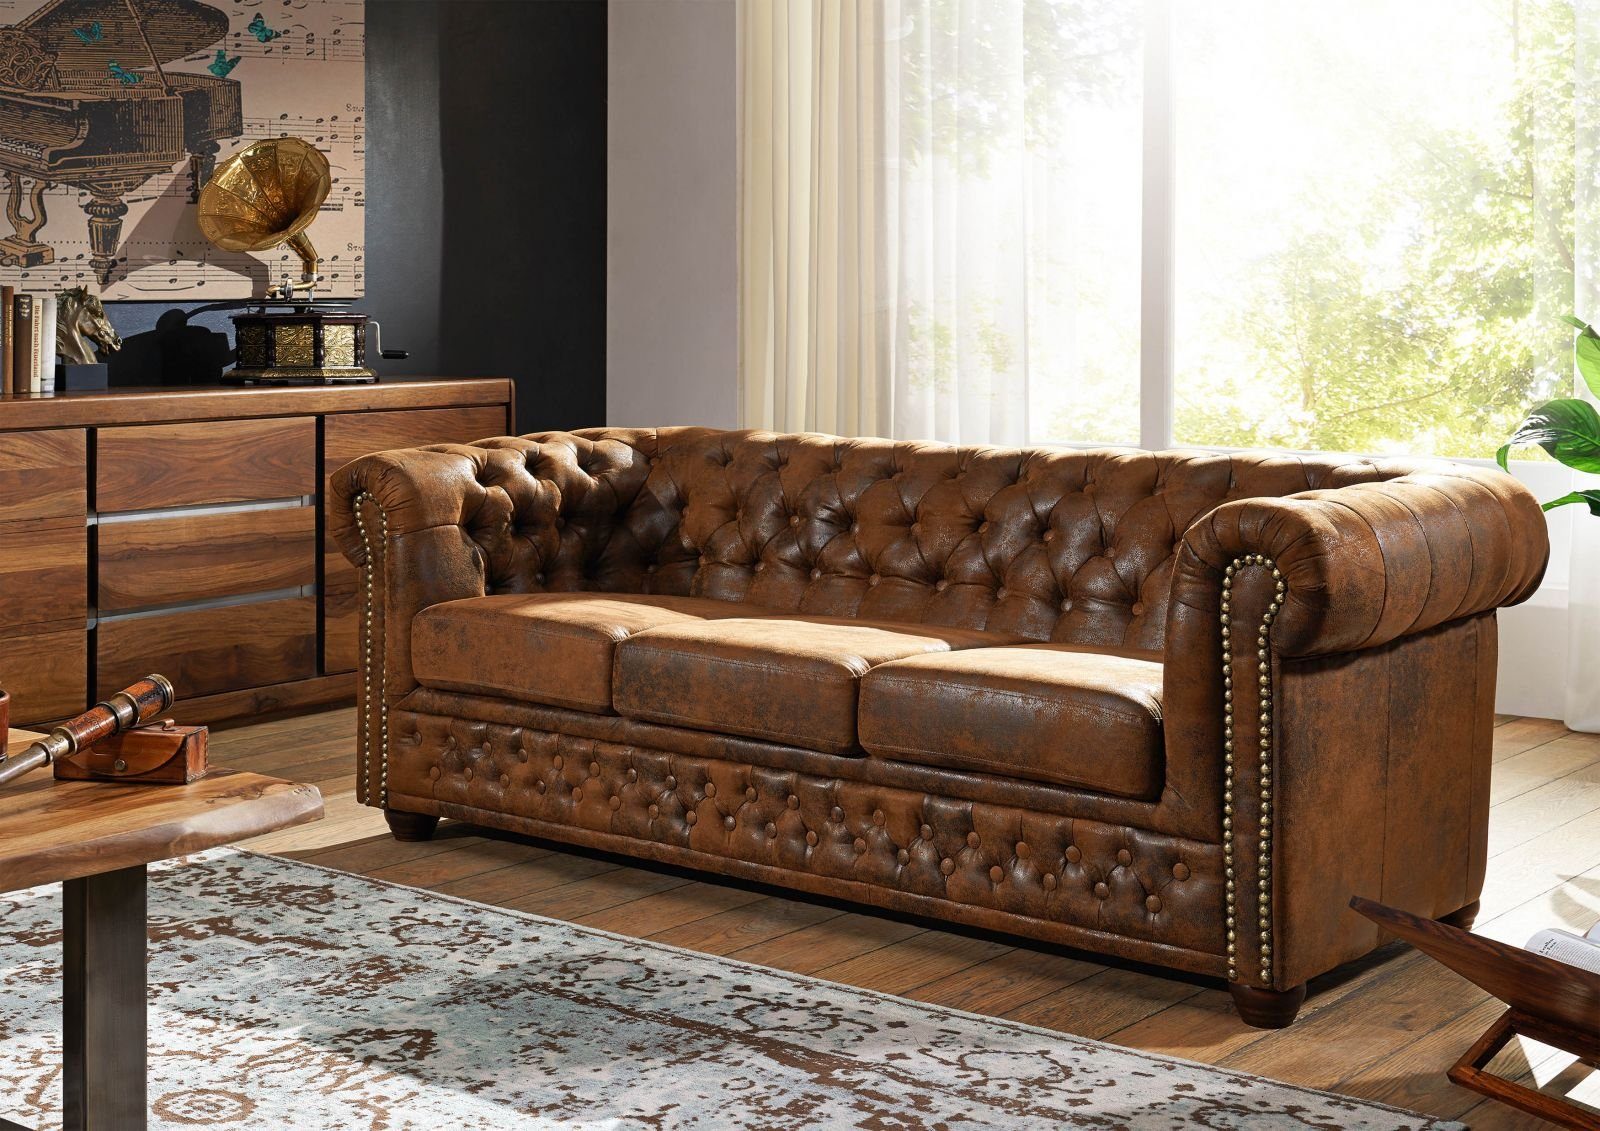 Massivmoebel24 Chesterfield-Sofa CHESTERFIELD, Couch im Vintage-Look,  Chesterfield Design, Retro Look, Wellenfederung